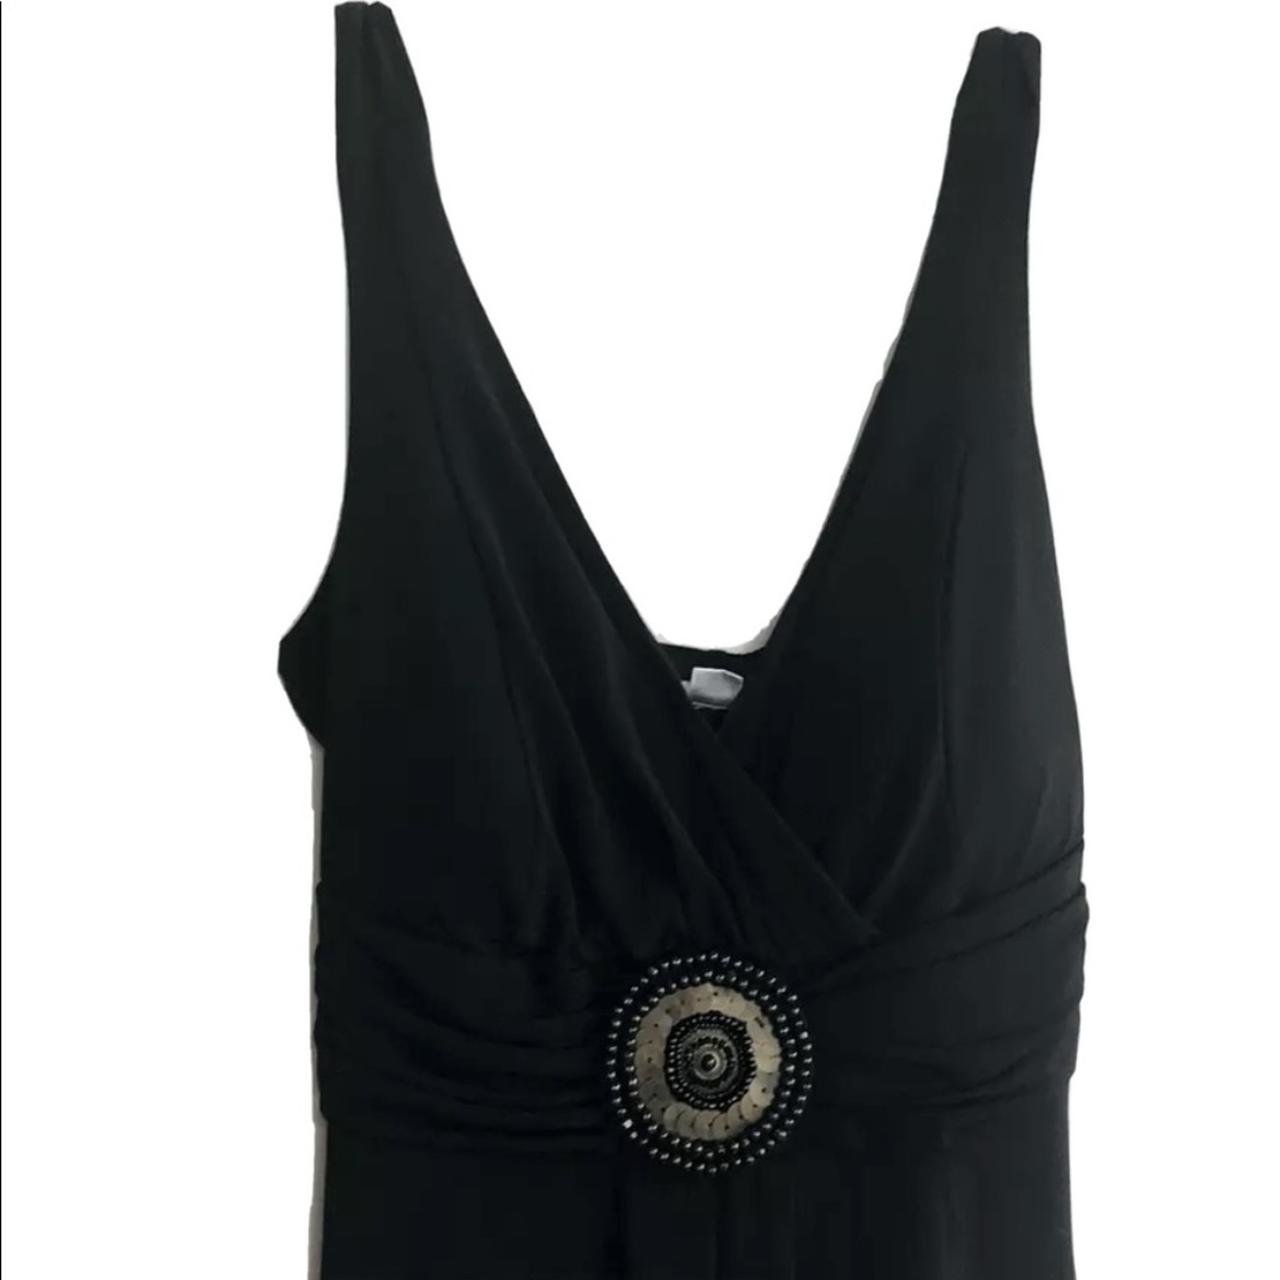 Enfocus Studio Women's Black and Tan Dress (2)